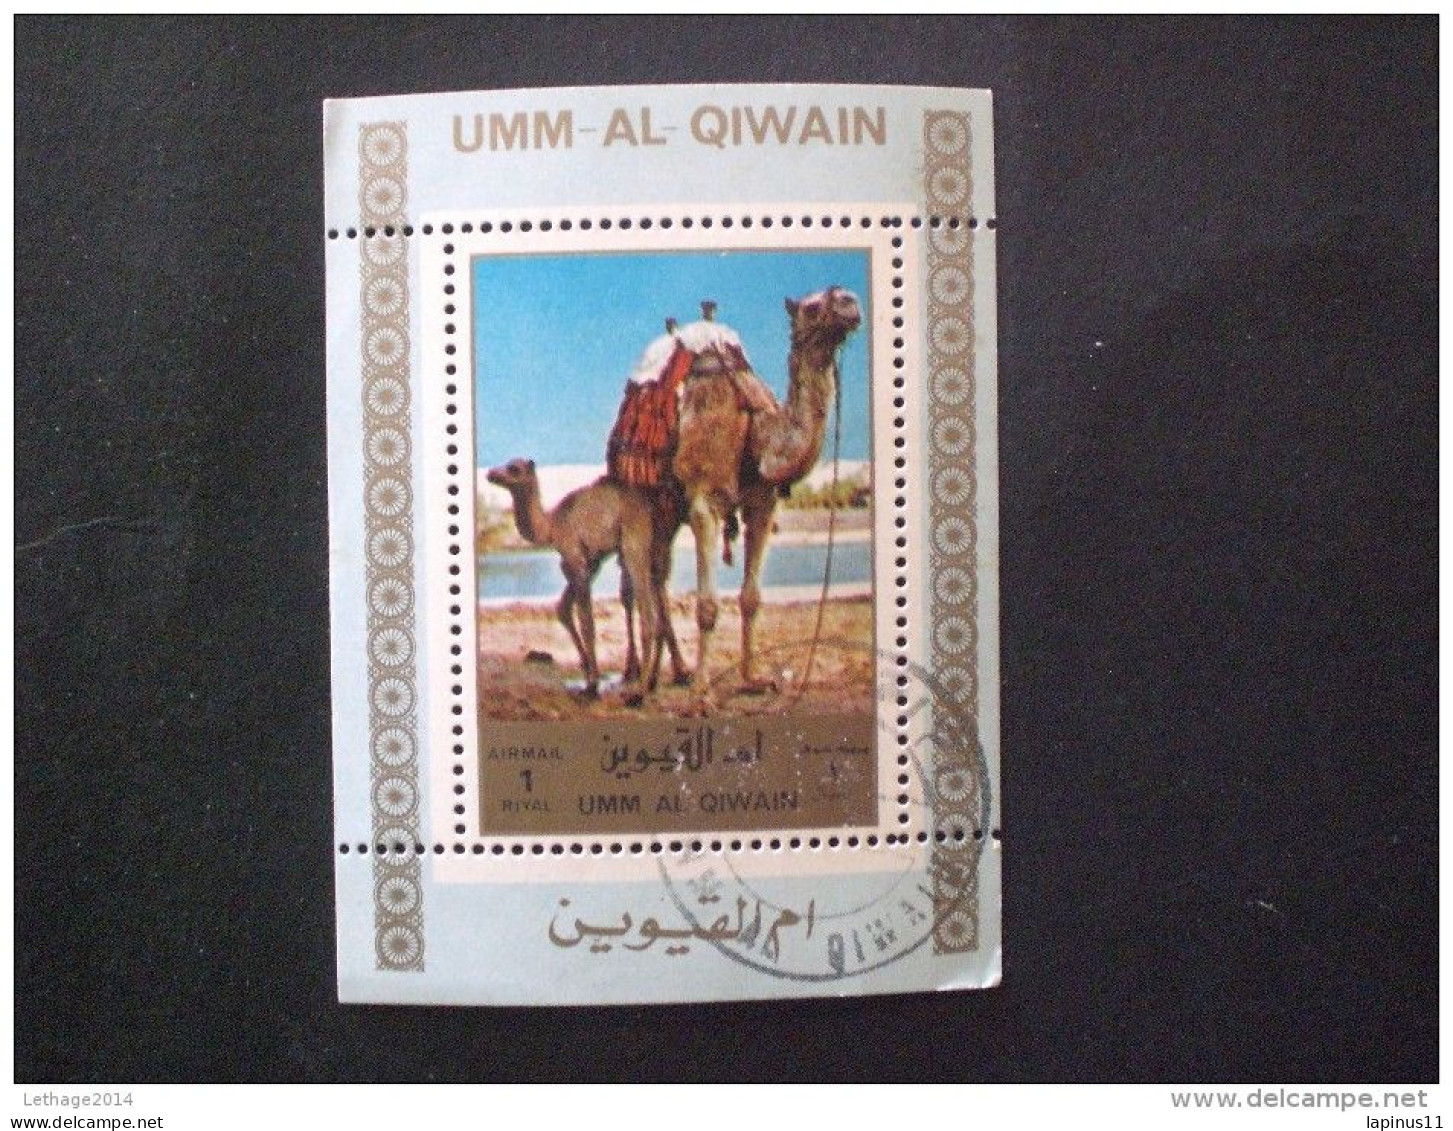 PRINTS ARAB EMIRATES UMM AL-QIWAN 1972 Airmail - Animals - Umm Al-Qaiwain